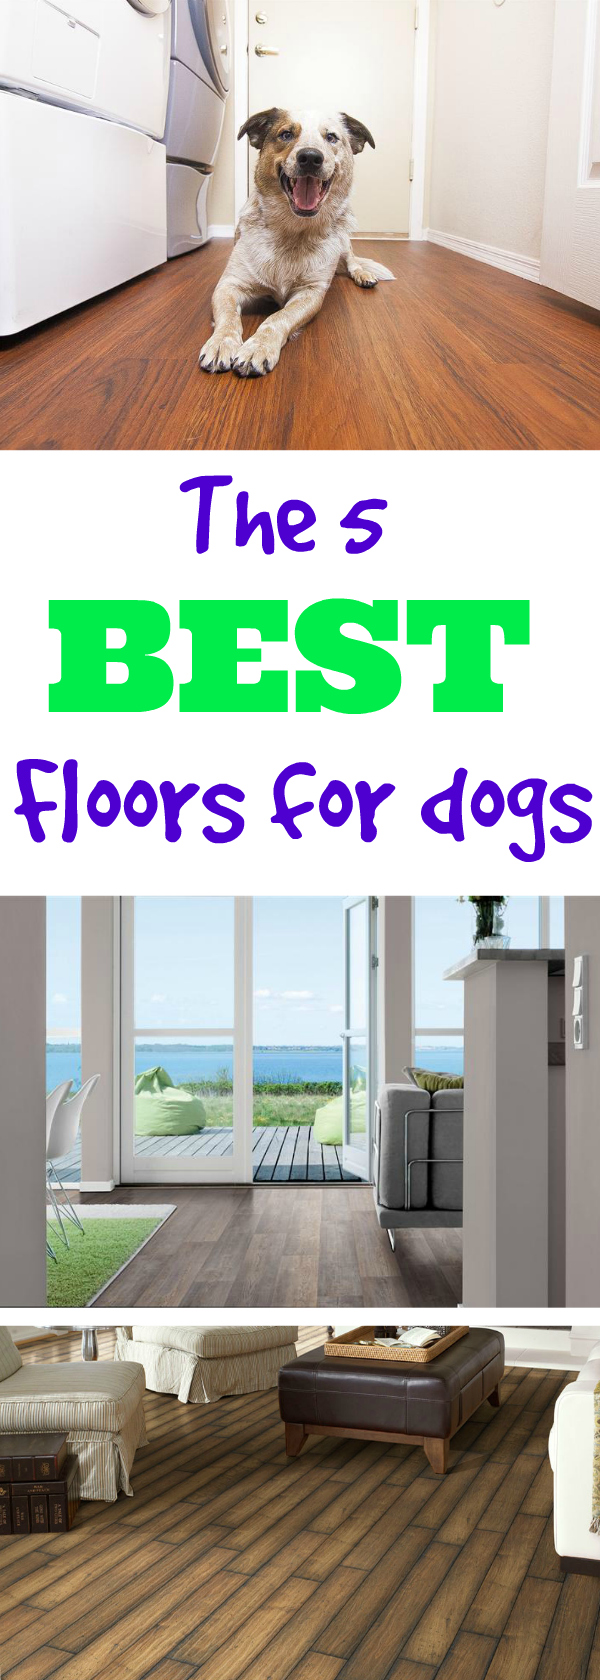 https://www.flooringinc.com/blog/wp-content/uploads/2016/05/best-flooring-for-dogs-flooringinc.jpg